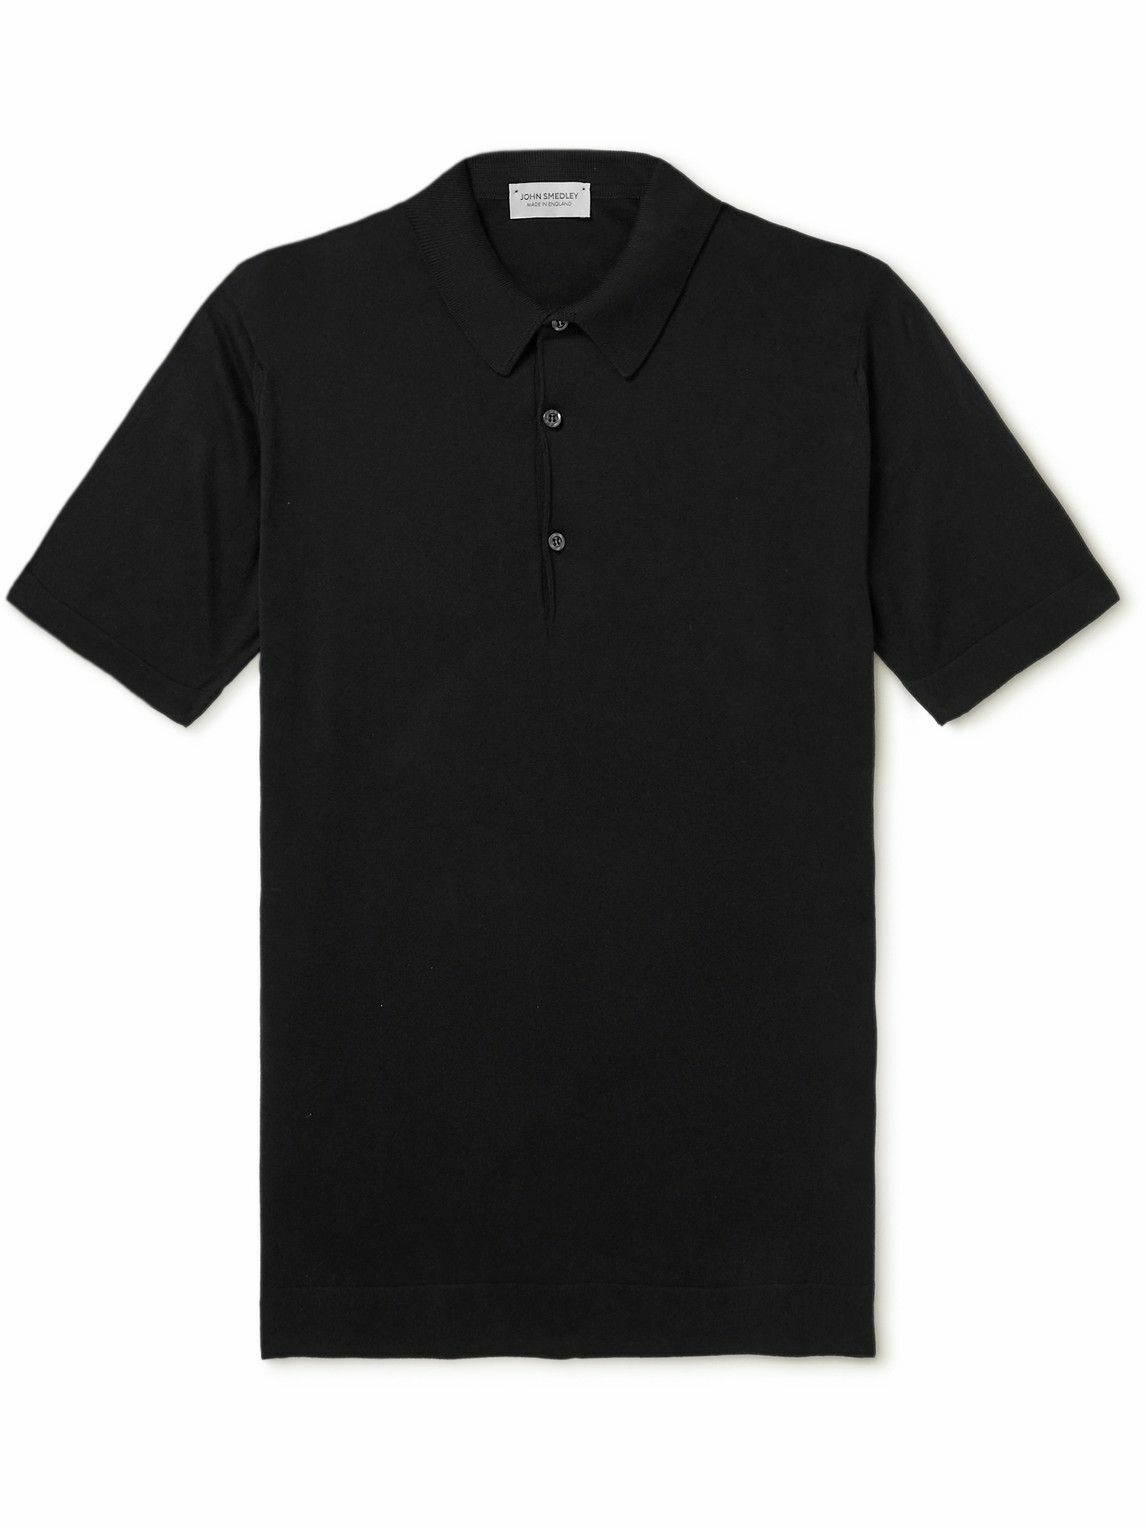 John Smedley - Mycroft Sea Island Cotton Polo Shirt - Black John Smedley